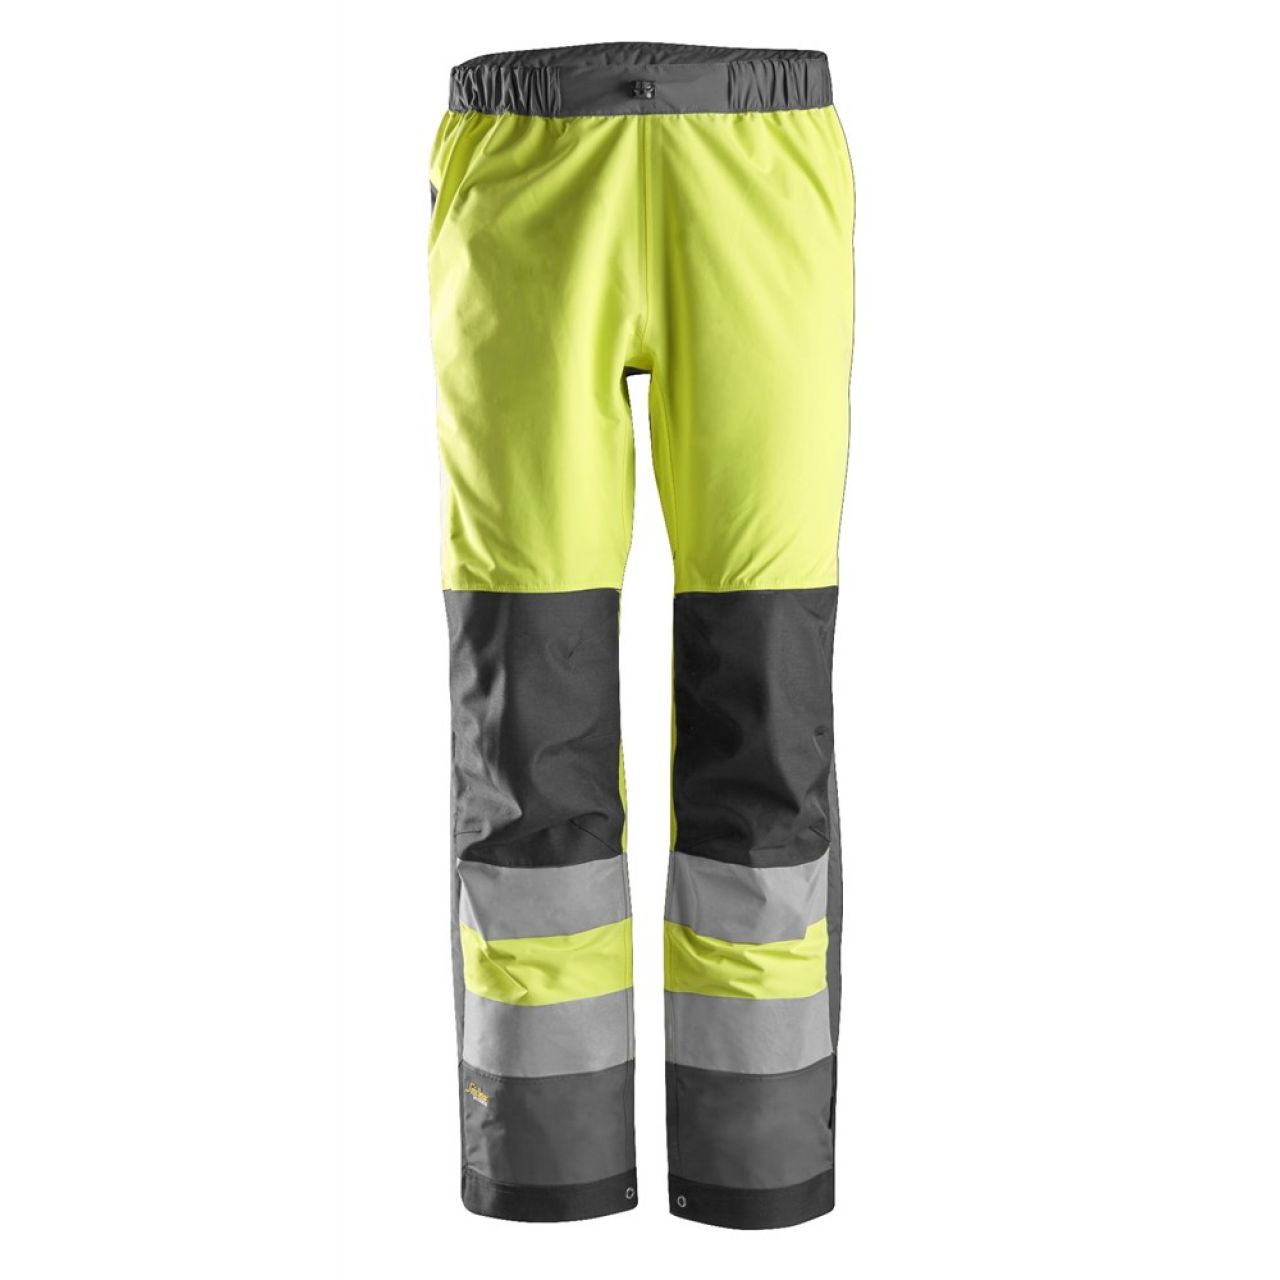 6530 Pantalones largos de trabajo impermeables Waterproof Shell de alta visibilidad clase 2 AllroundWork amarillo-gris acero talla L